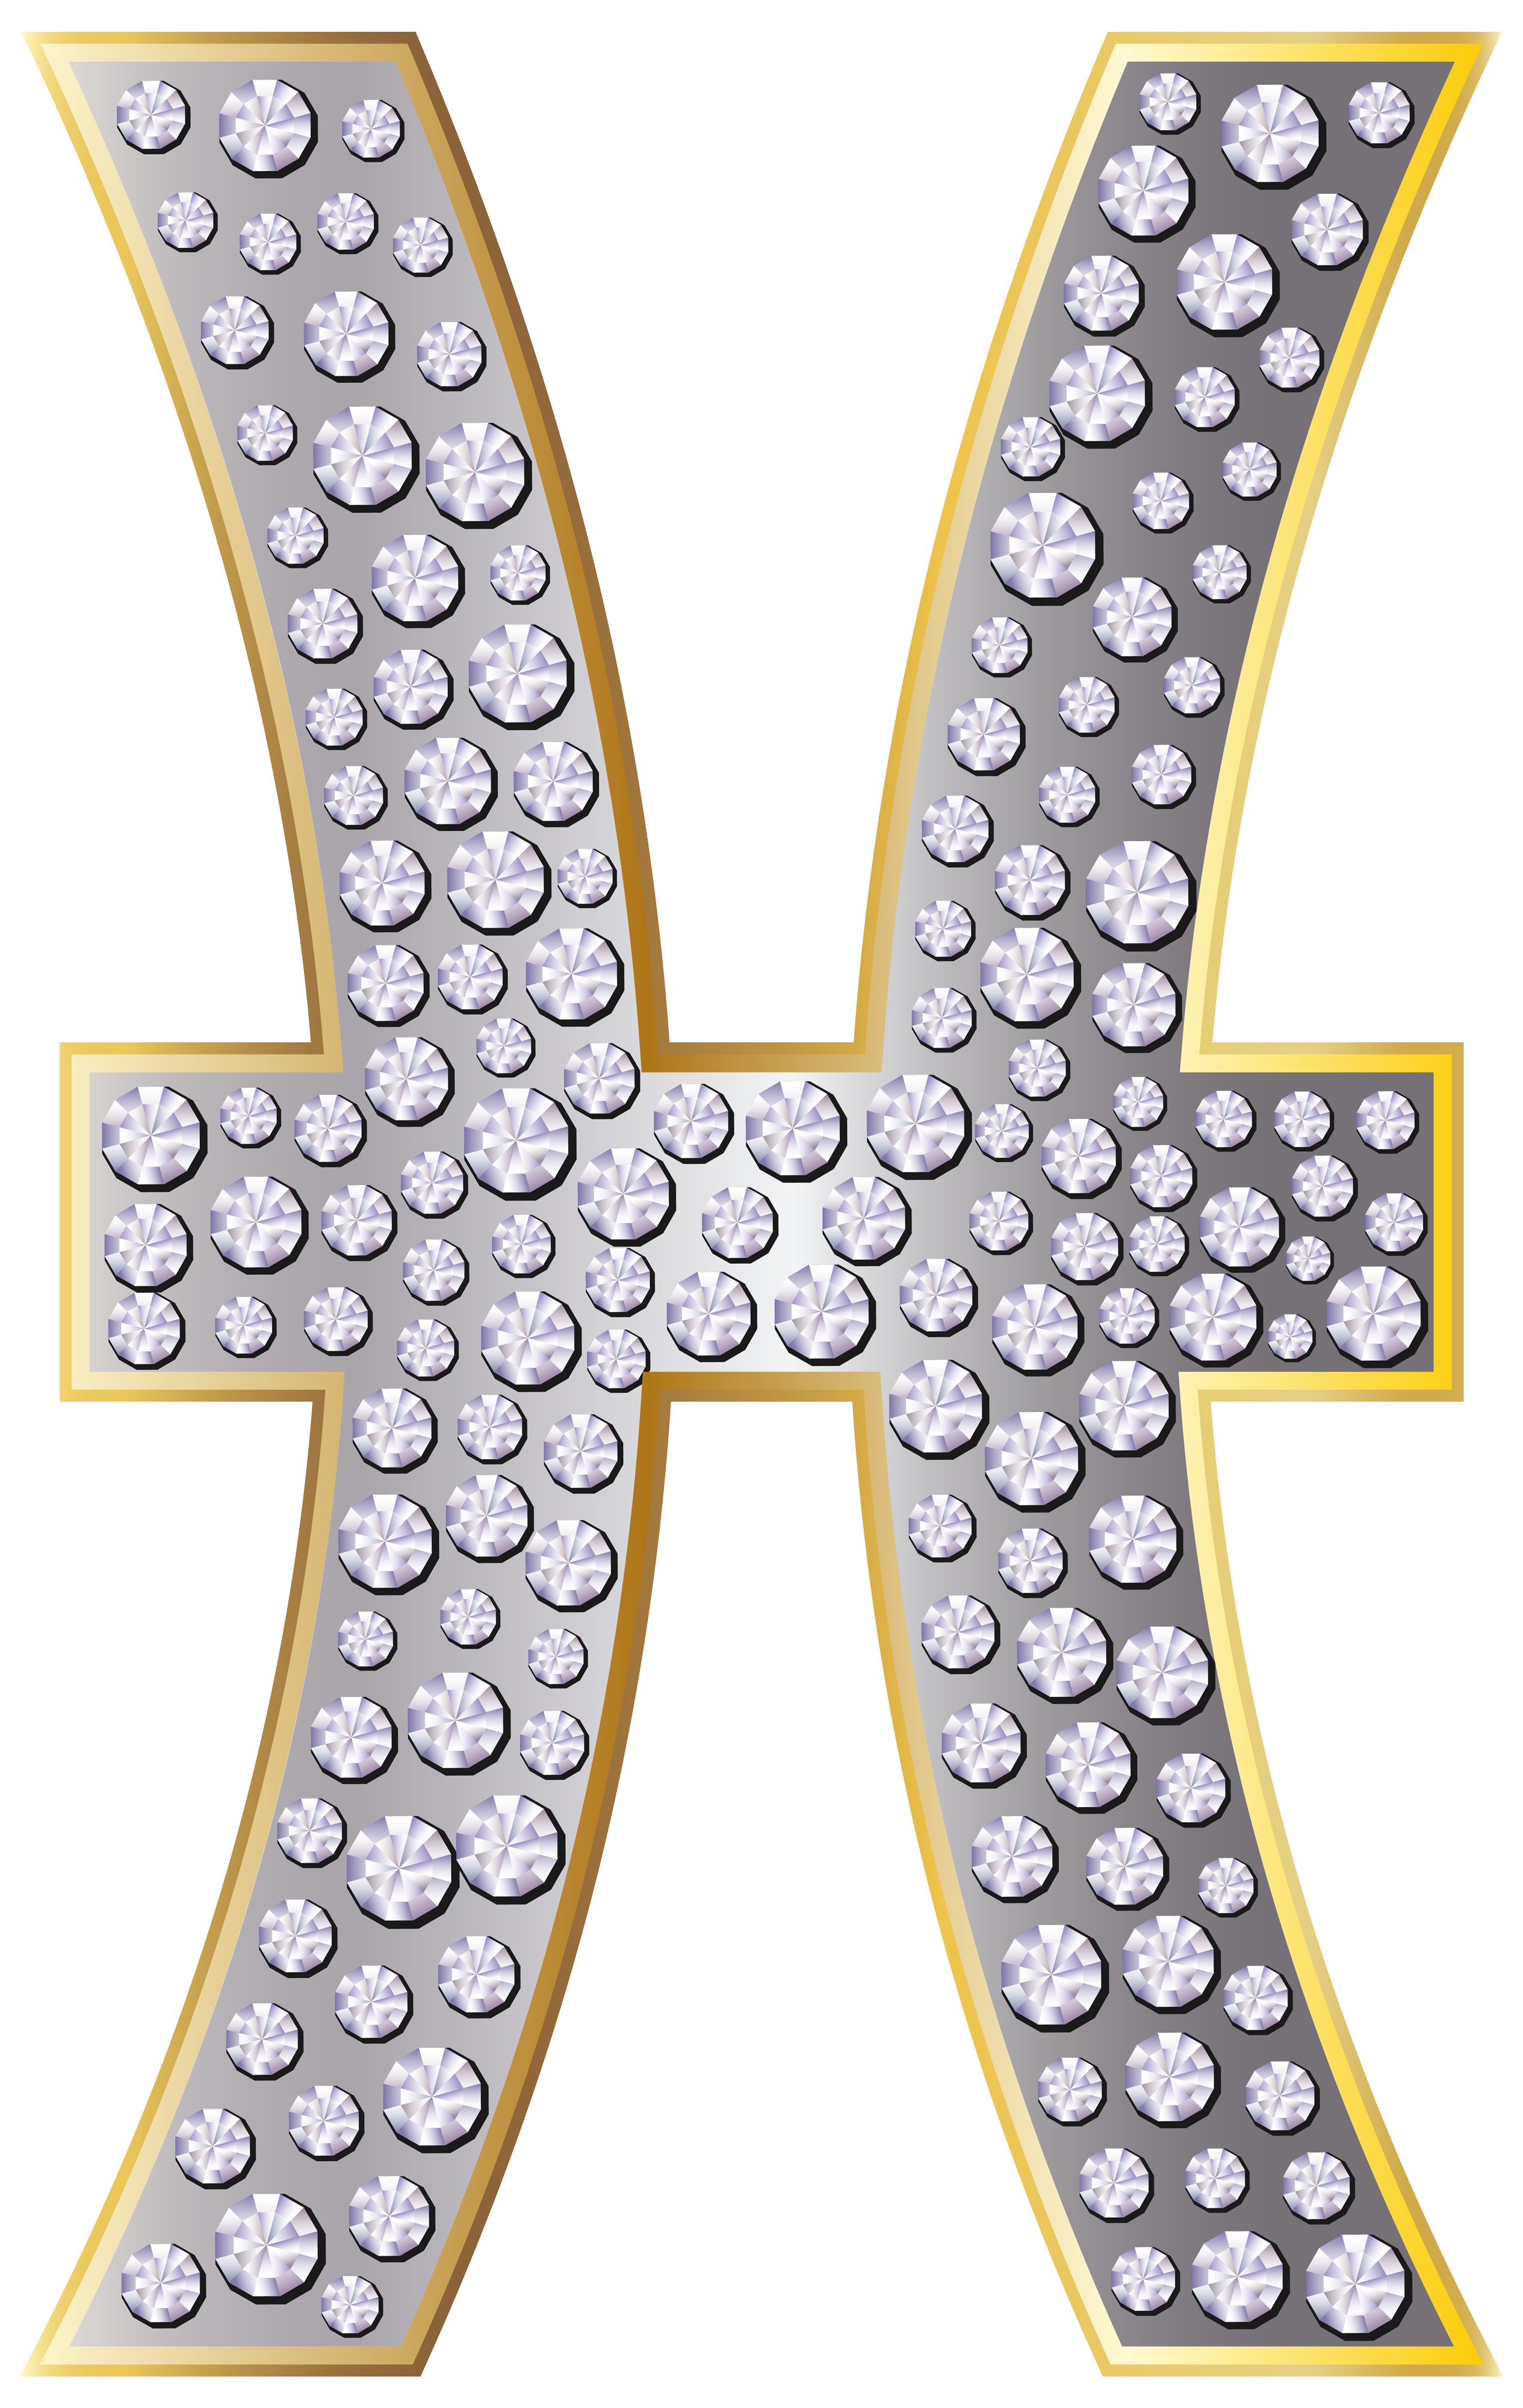 Cross Symbol Clipart